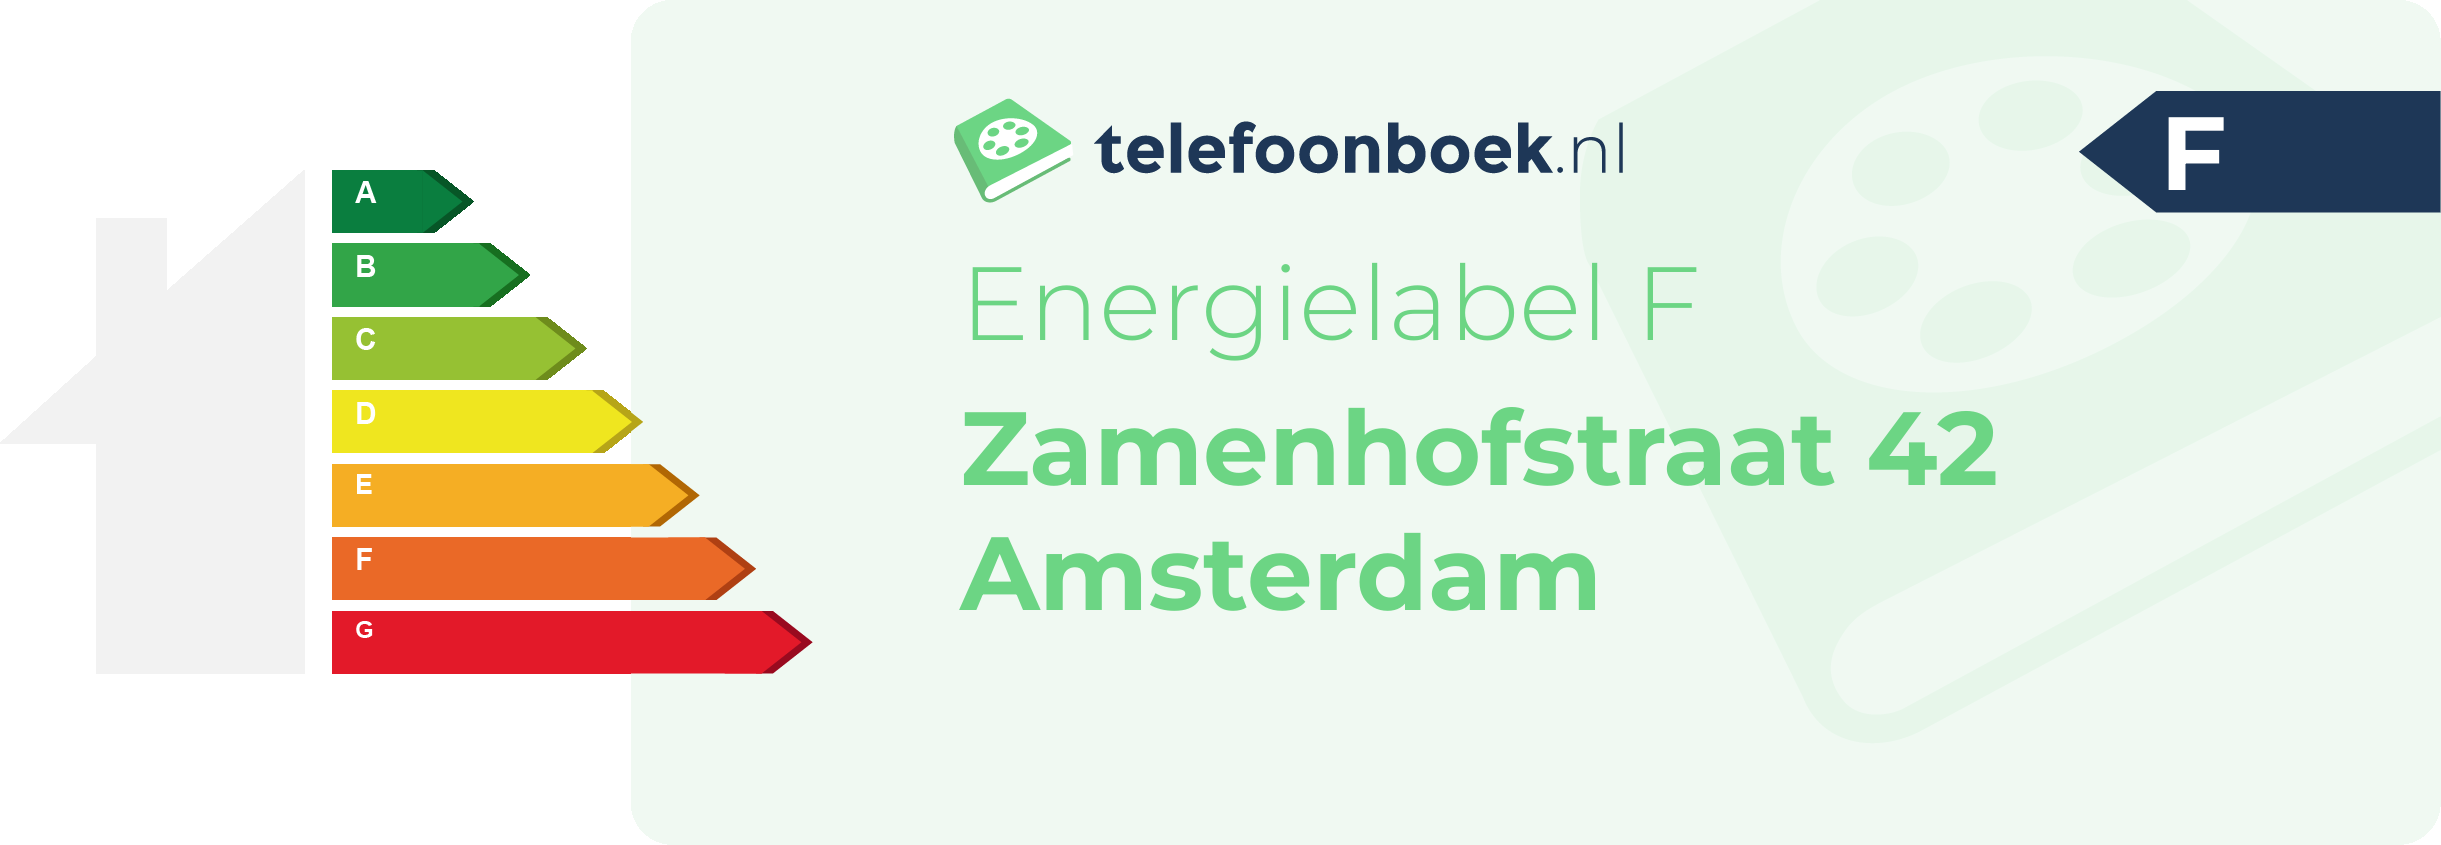 Energielabel Zamenhofstraat 42 Amsterdam